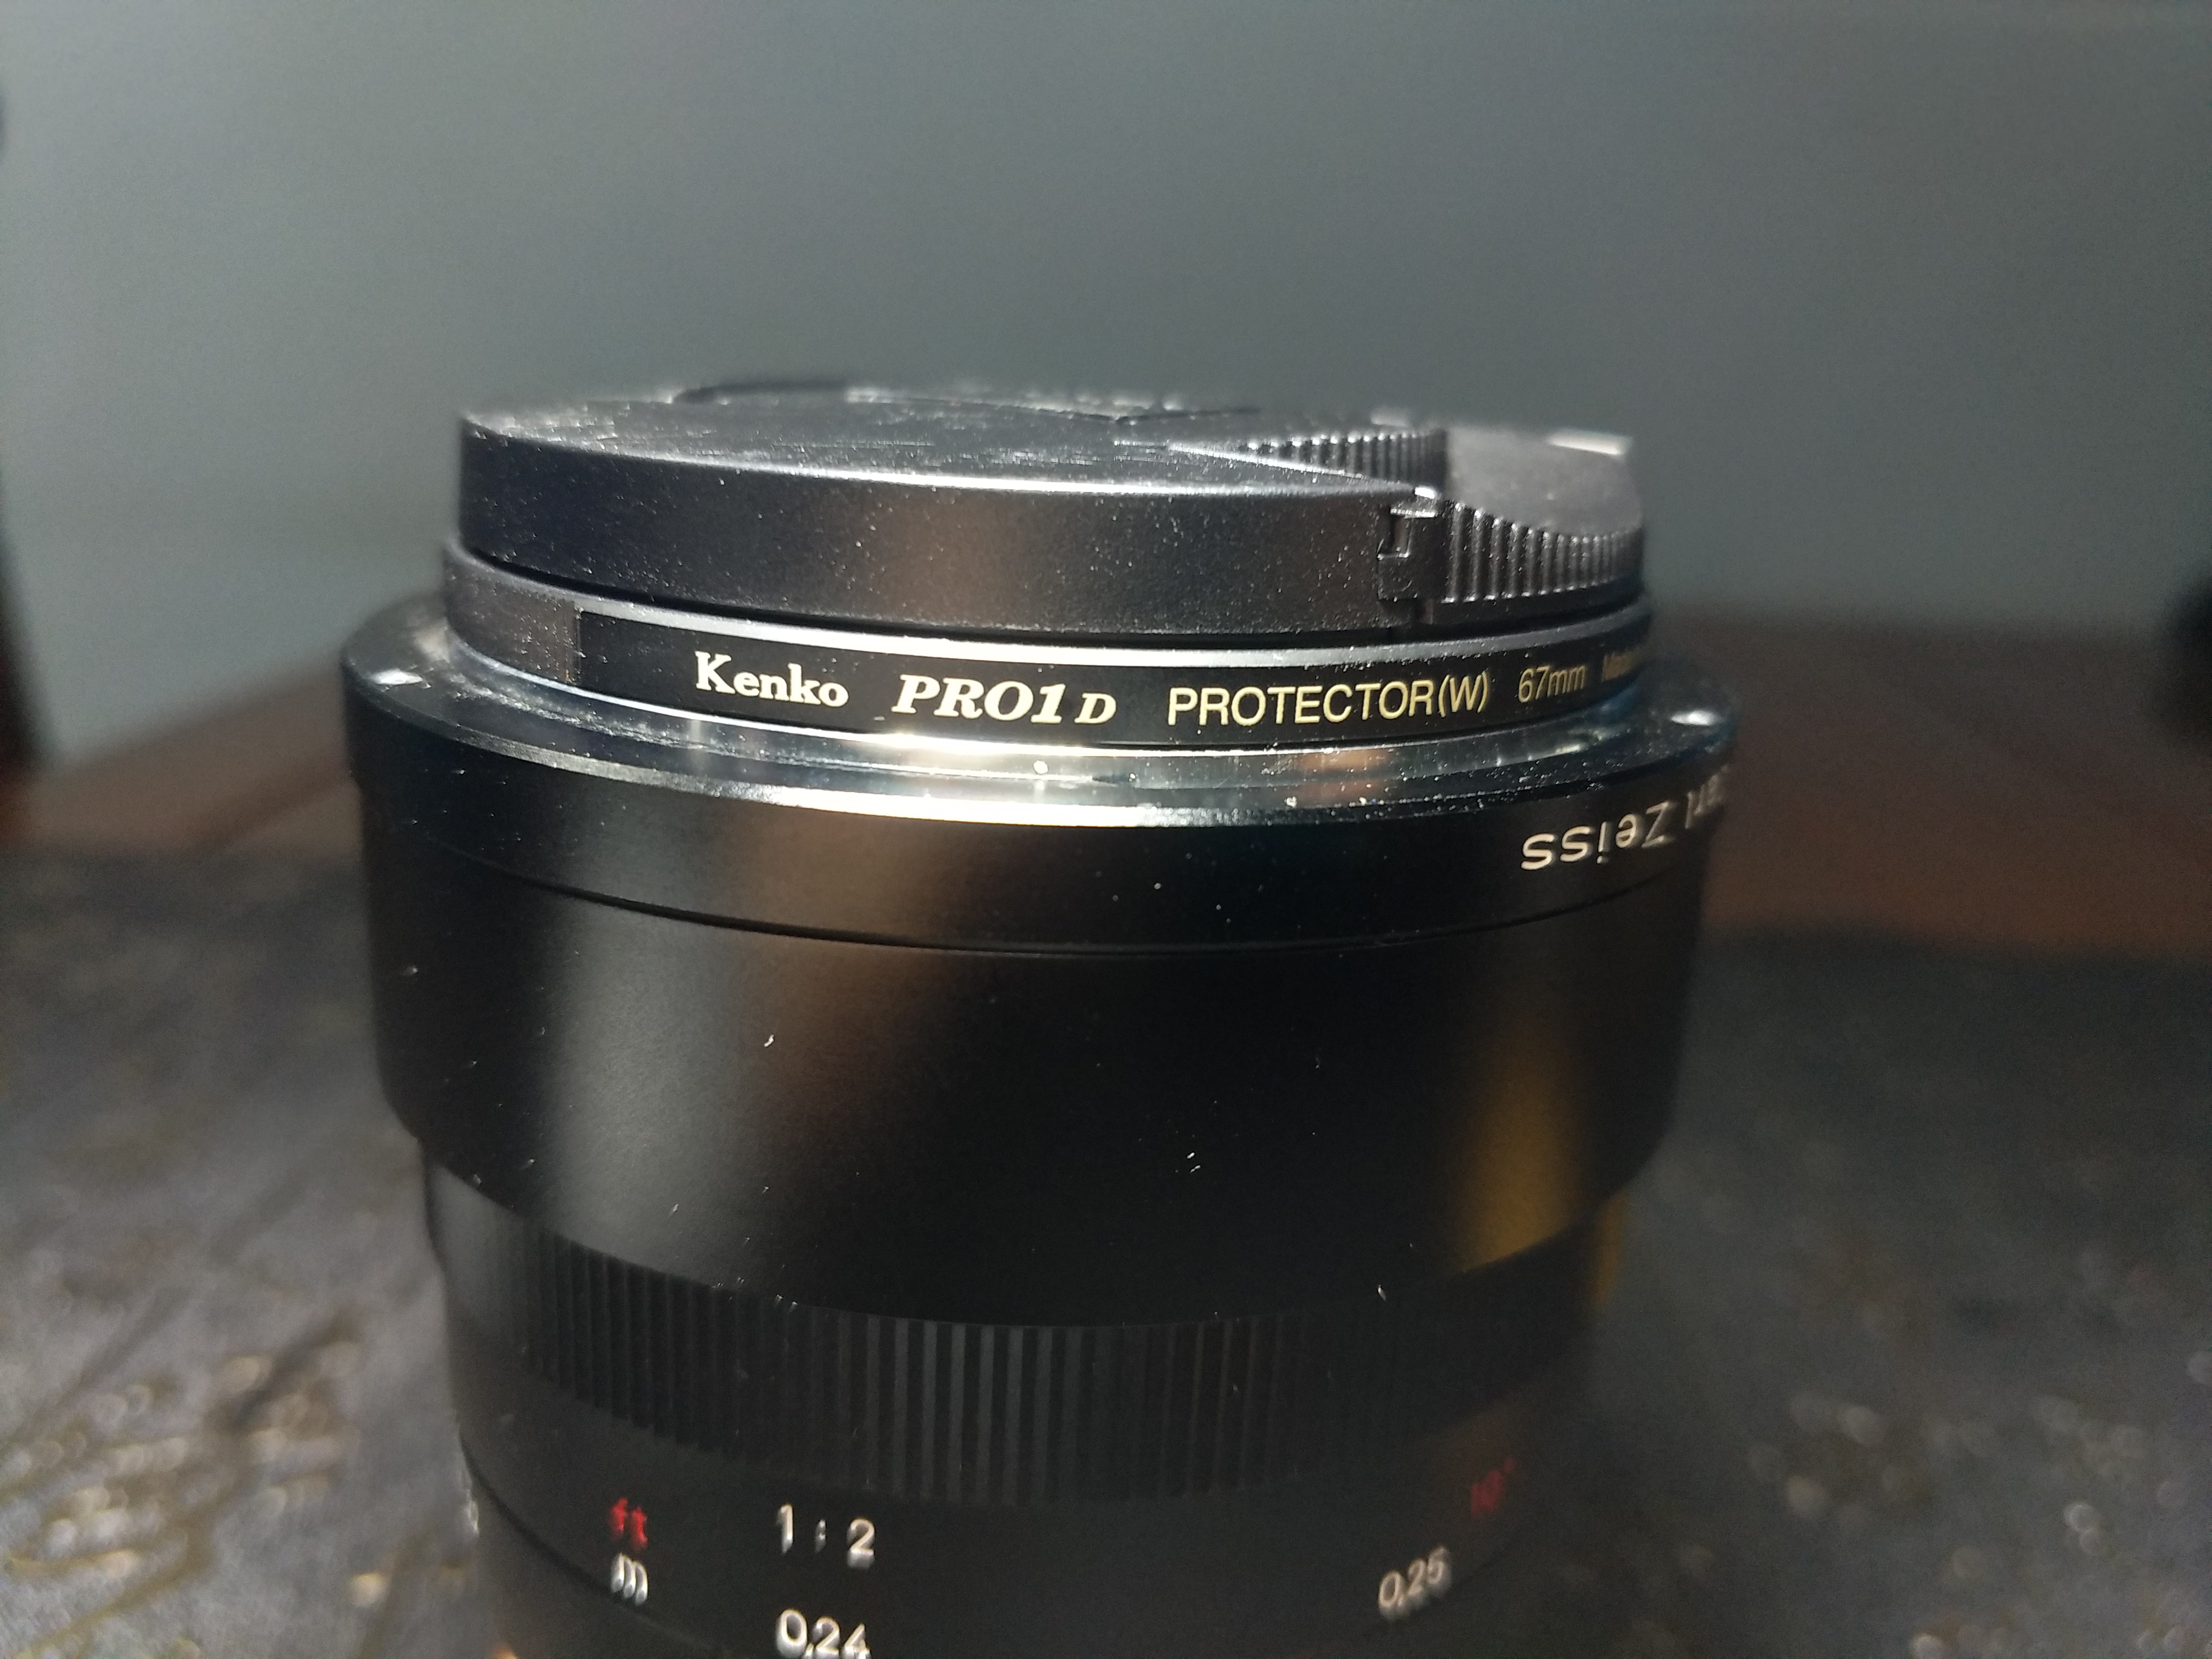  Carl Zeiss Planar T * 50mm f/2 ZE manual macro lens